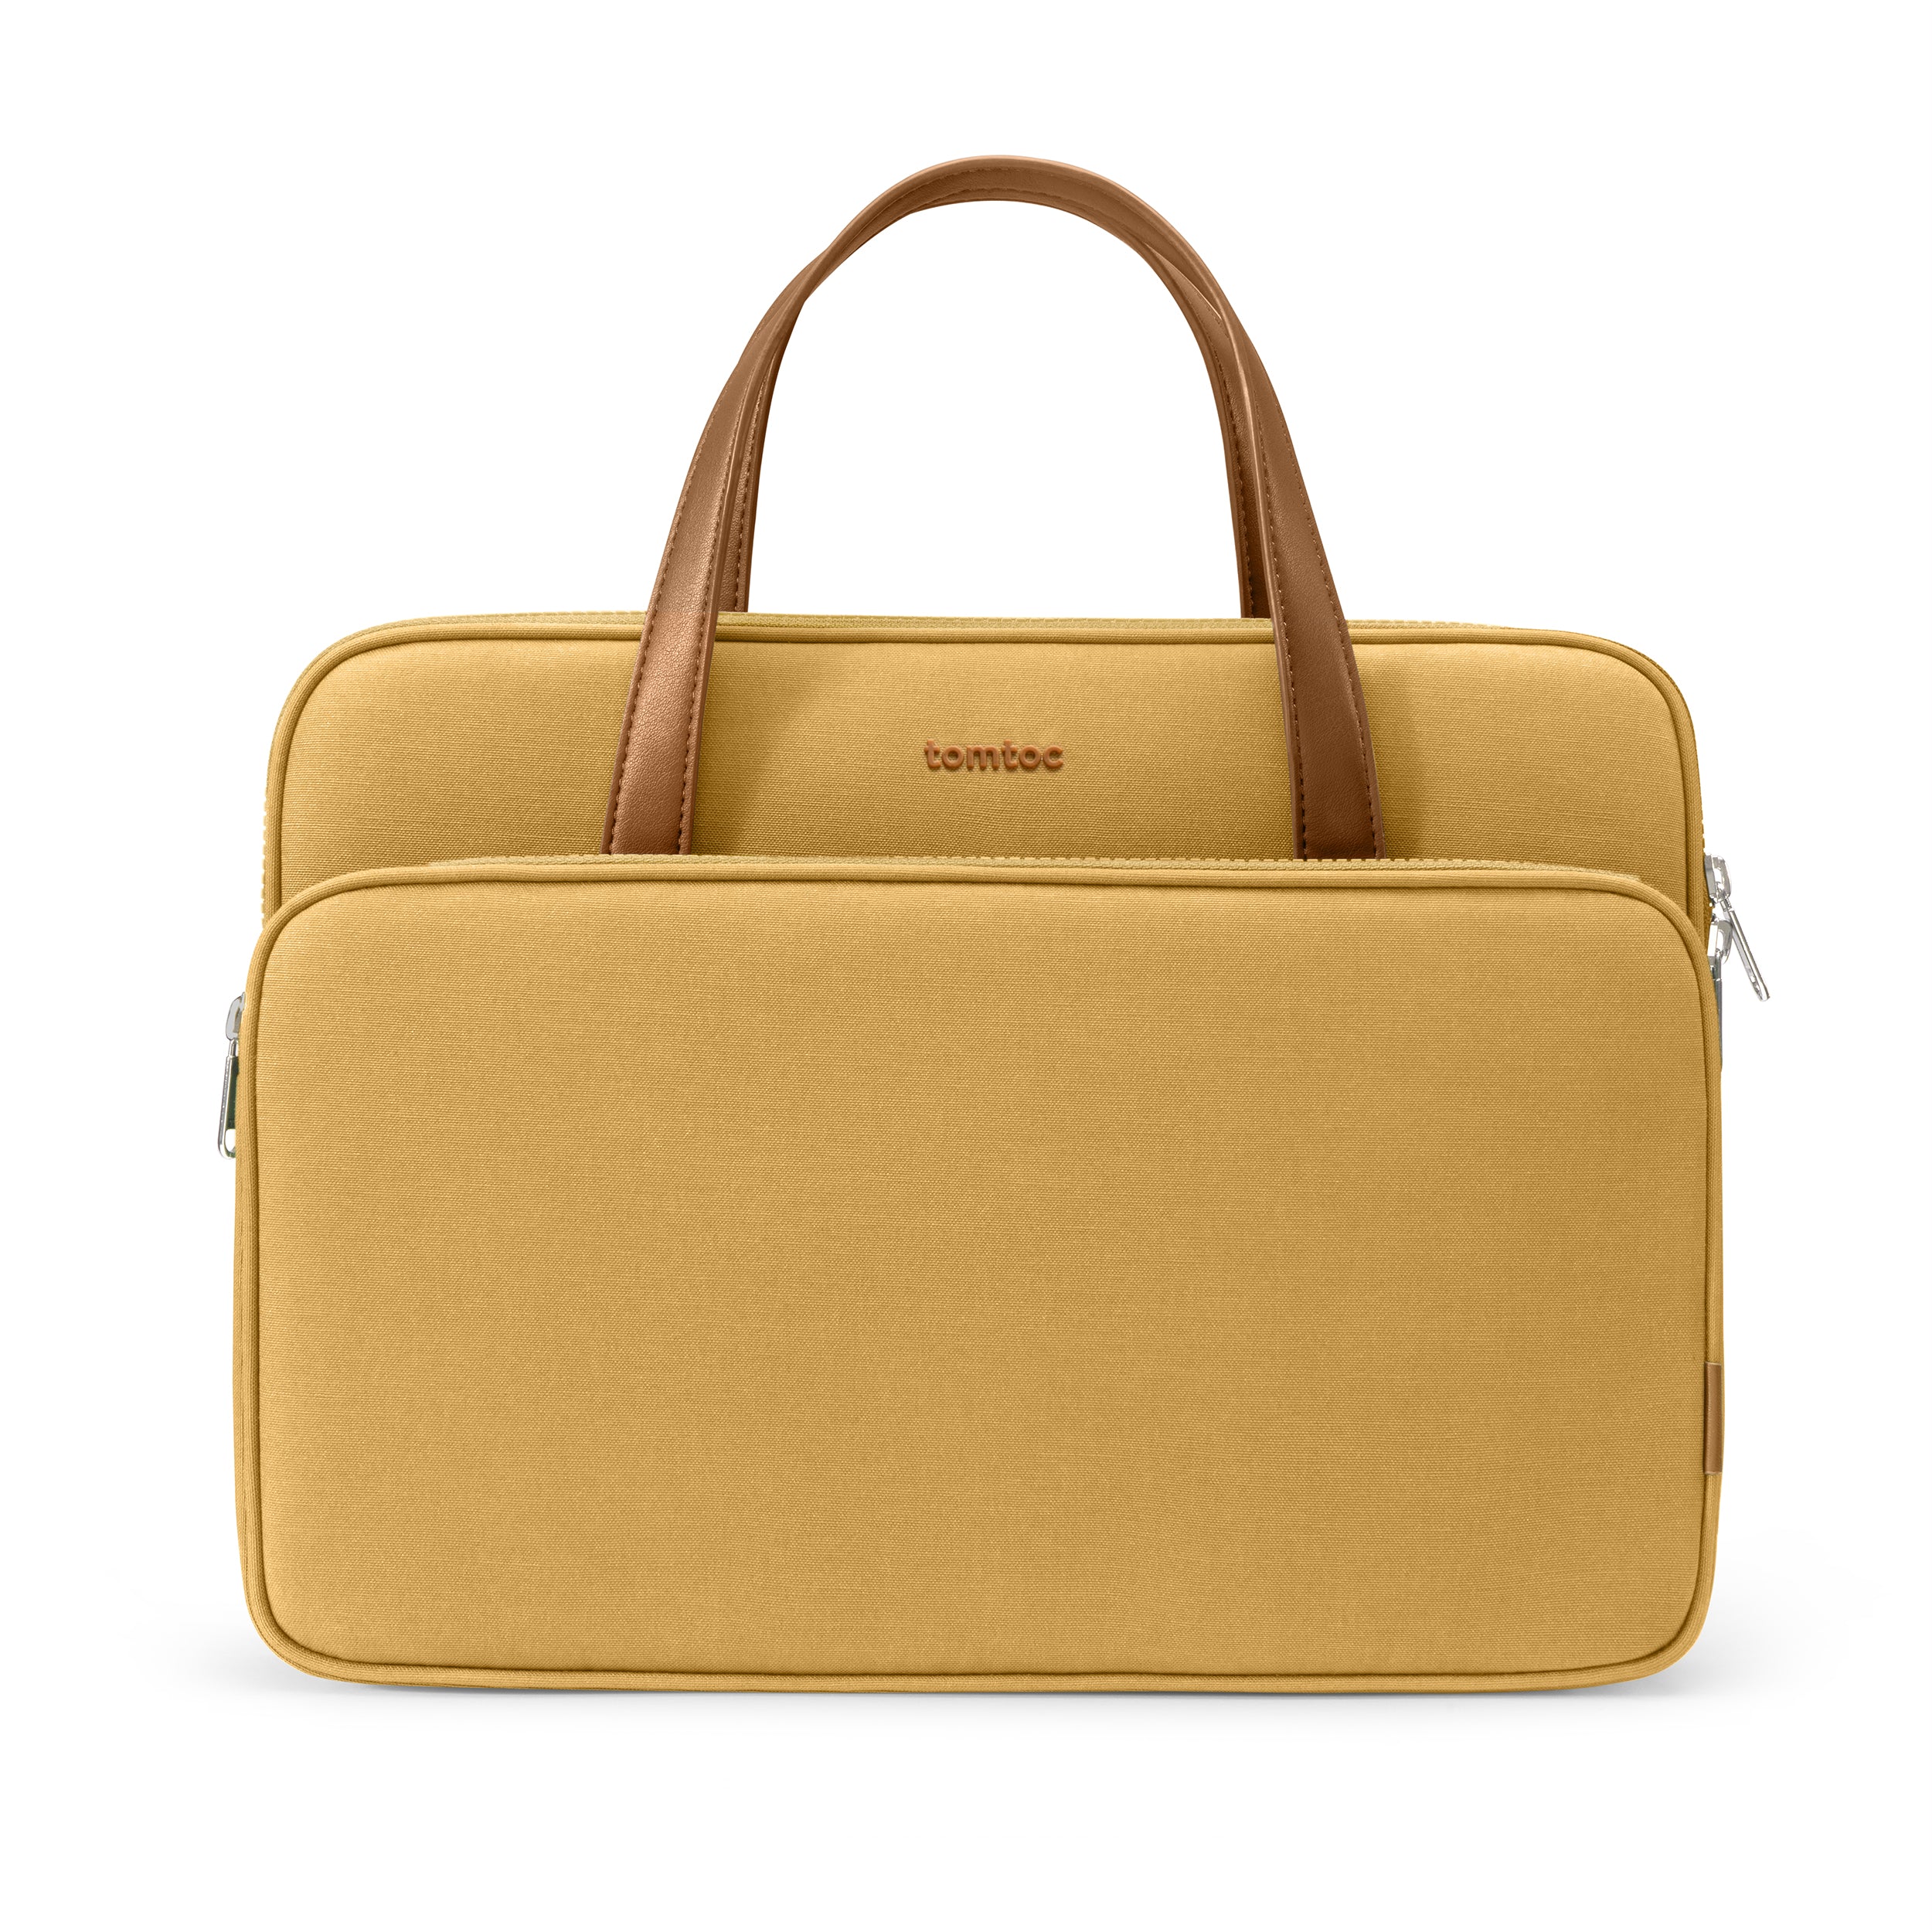 tomtoc H21 14 Inch Lady Laptop Bag / Handbag Women / Ladies Bag - Yell